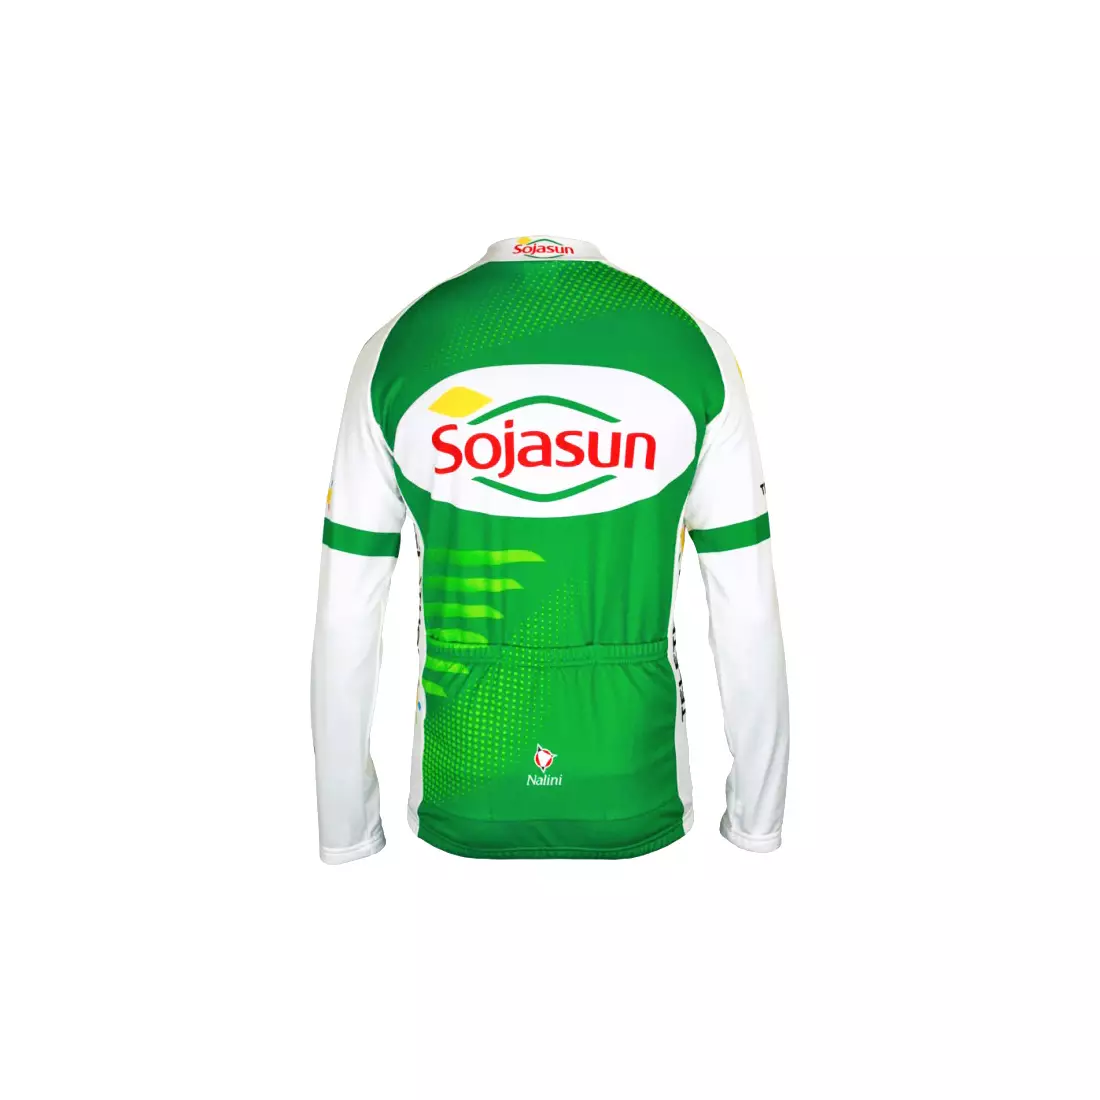 NALINI - TEAM SOJASUN 2013 - cycling sweatshirt